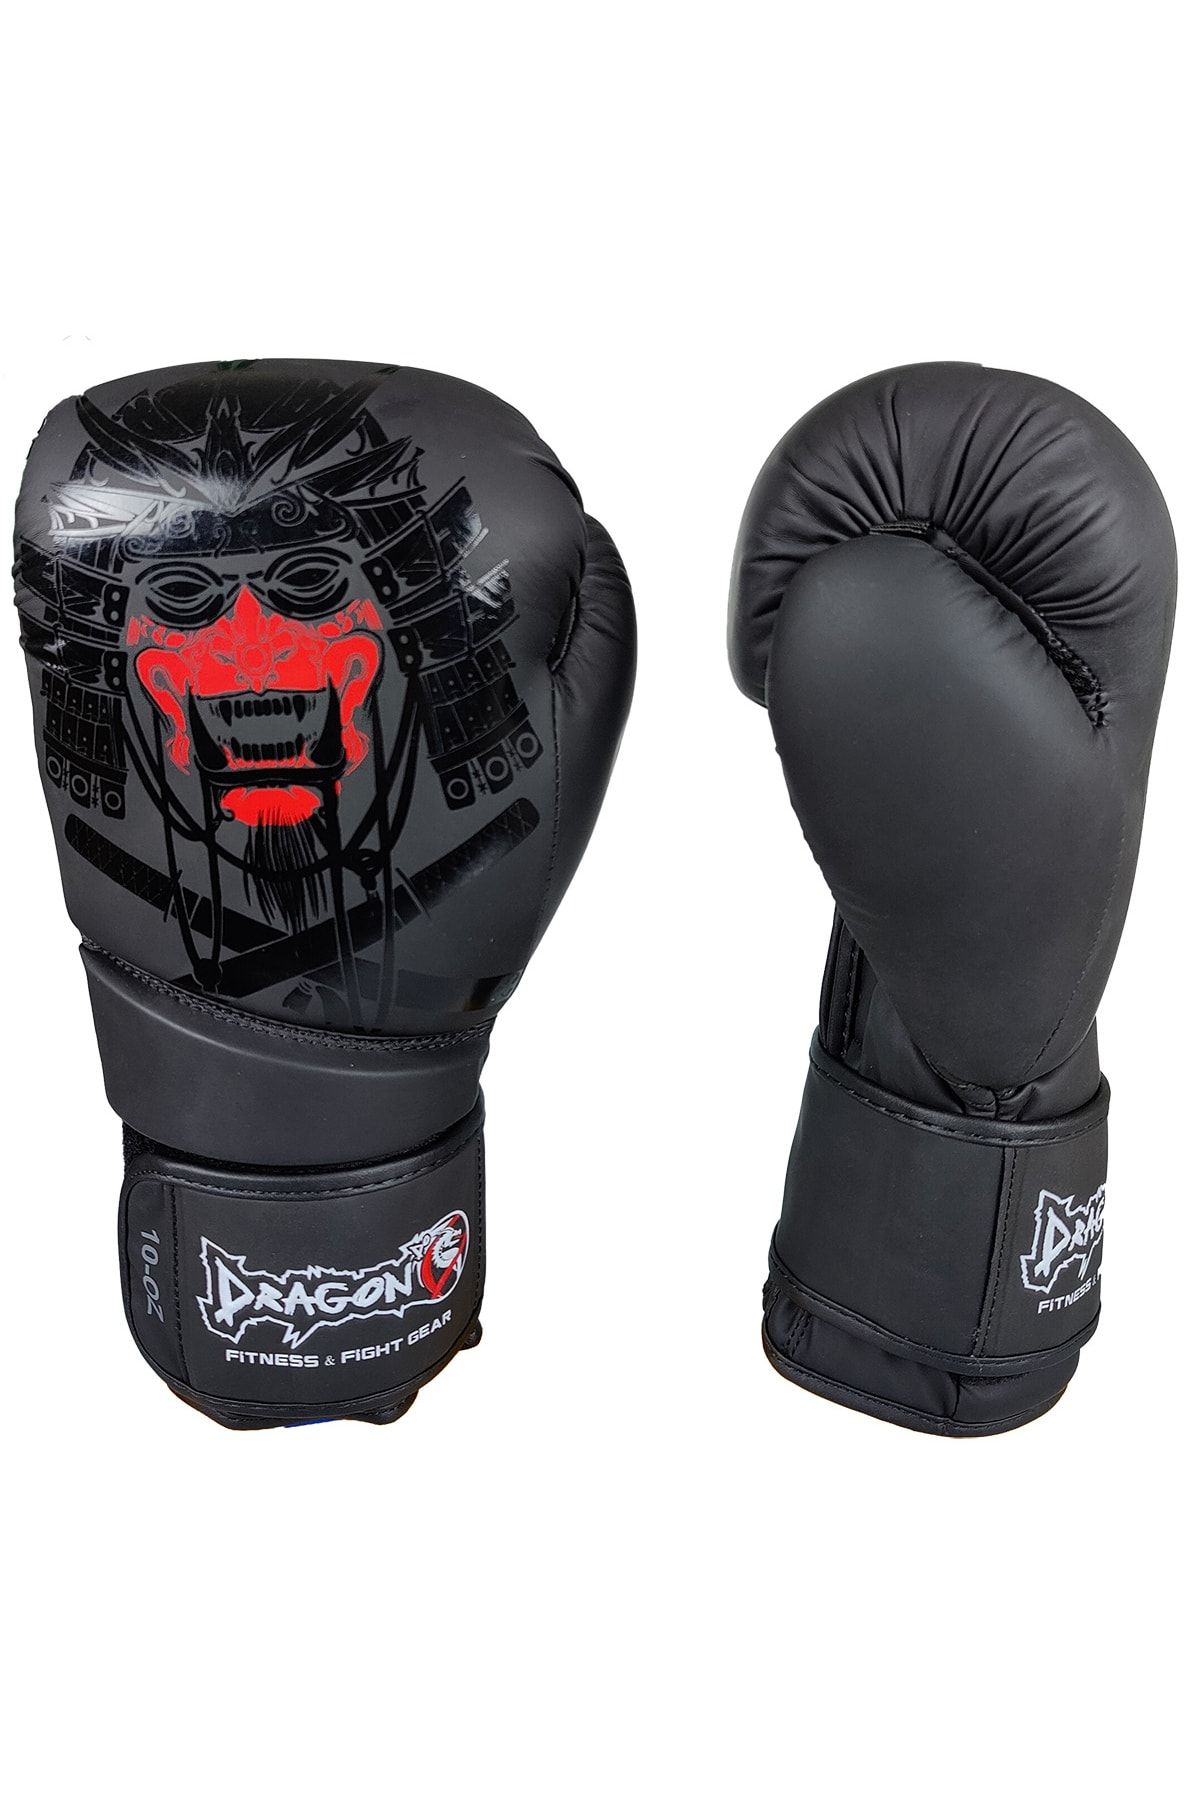 Dragondo 30128-p Yakuza Boks Eldiveni, Muay Thai Boxing Gloves